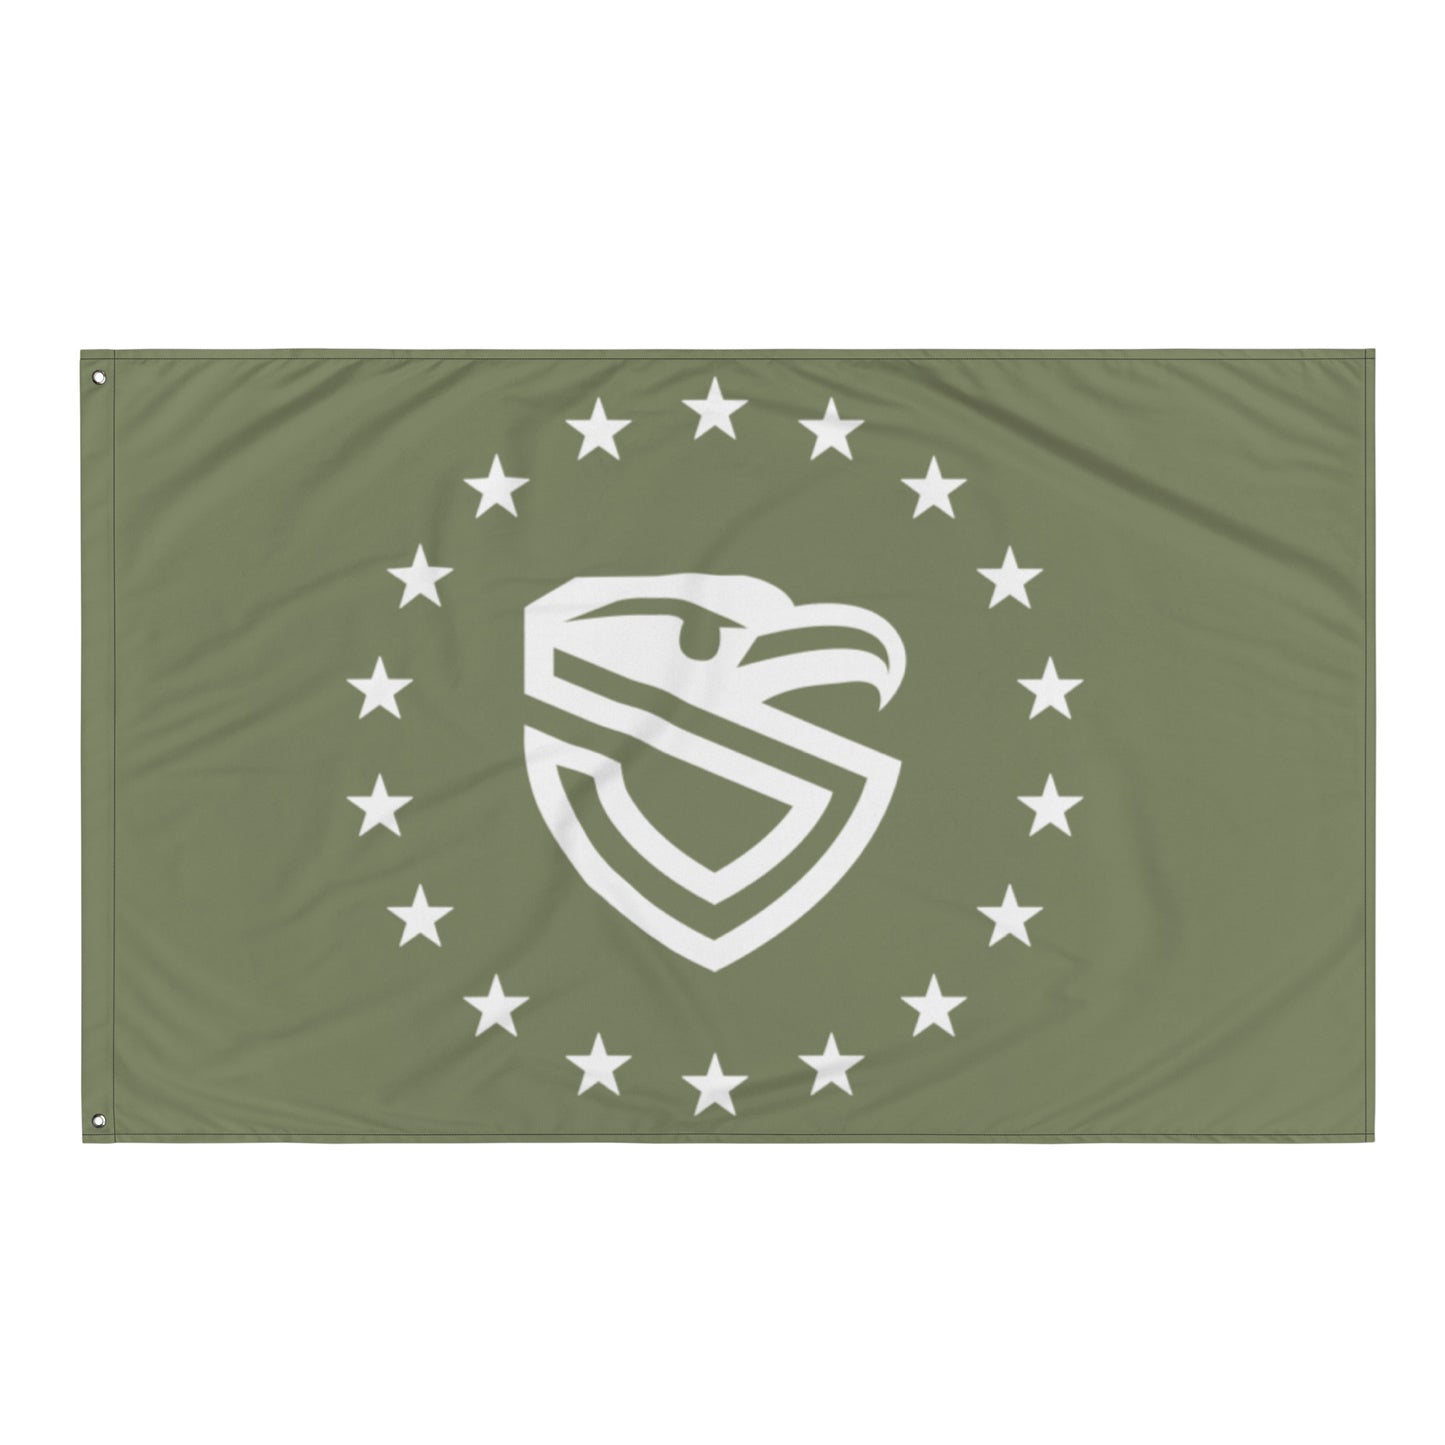 Stars and Shield Flag